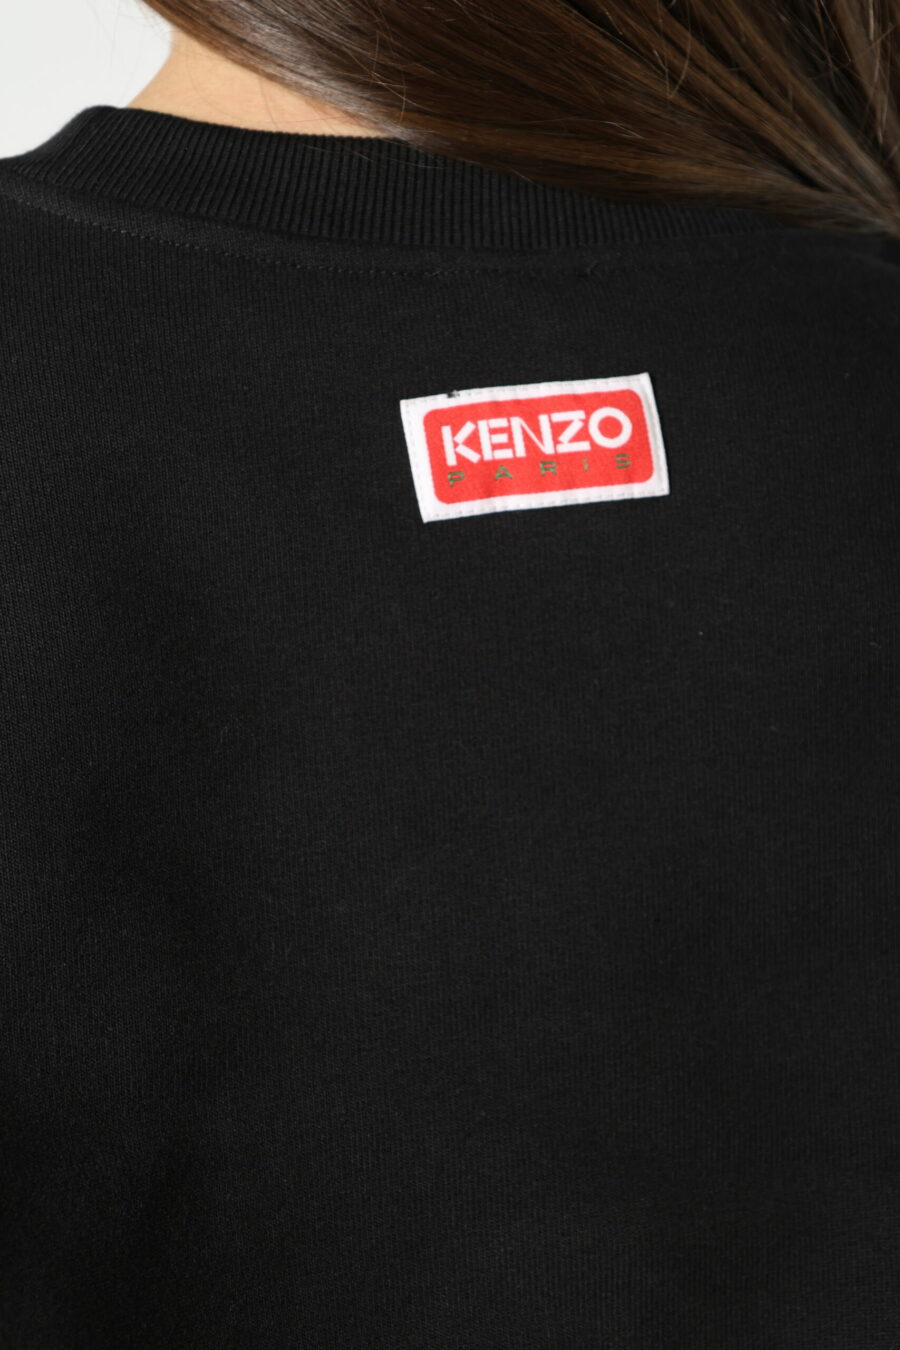 Black sweatshirt with "boke flower" logo - 8052865435499 347 scaled